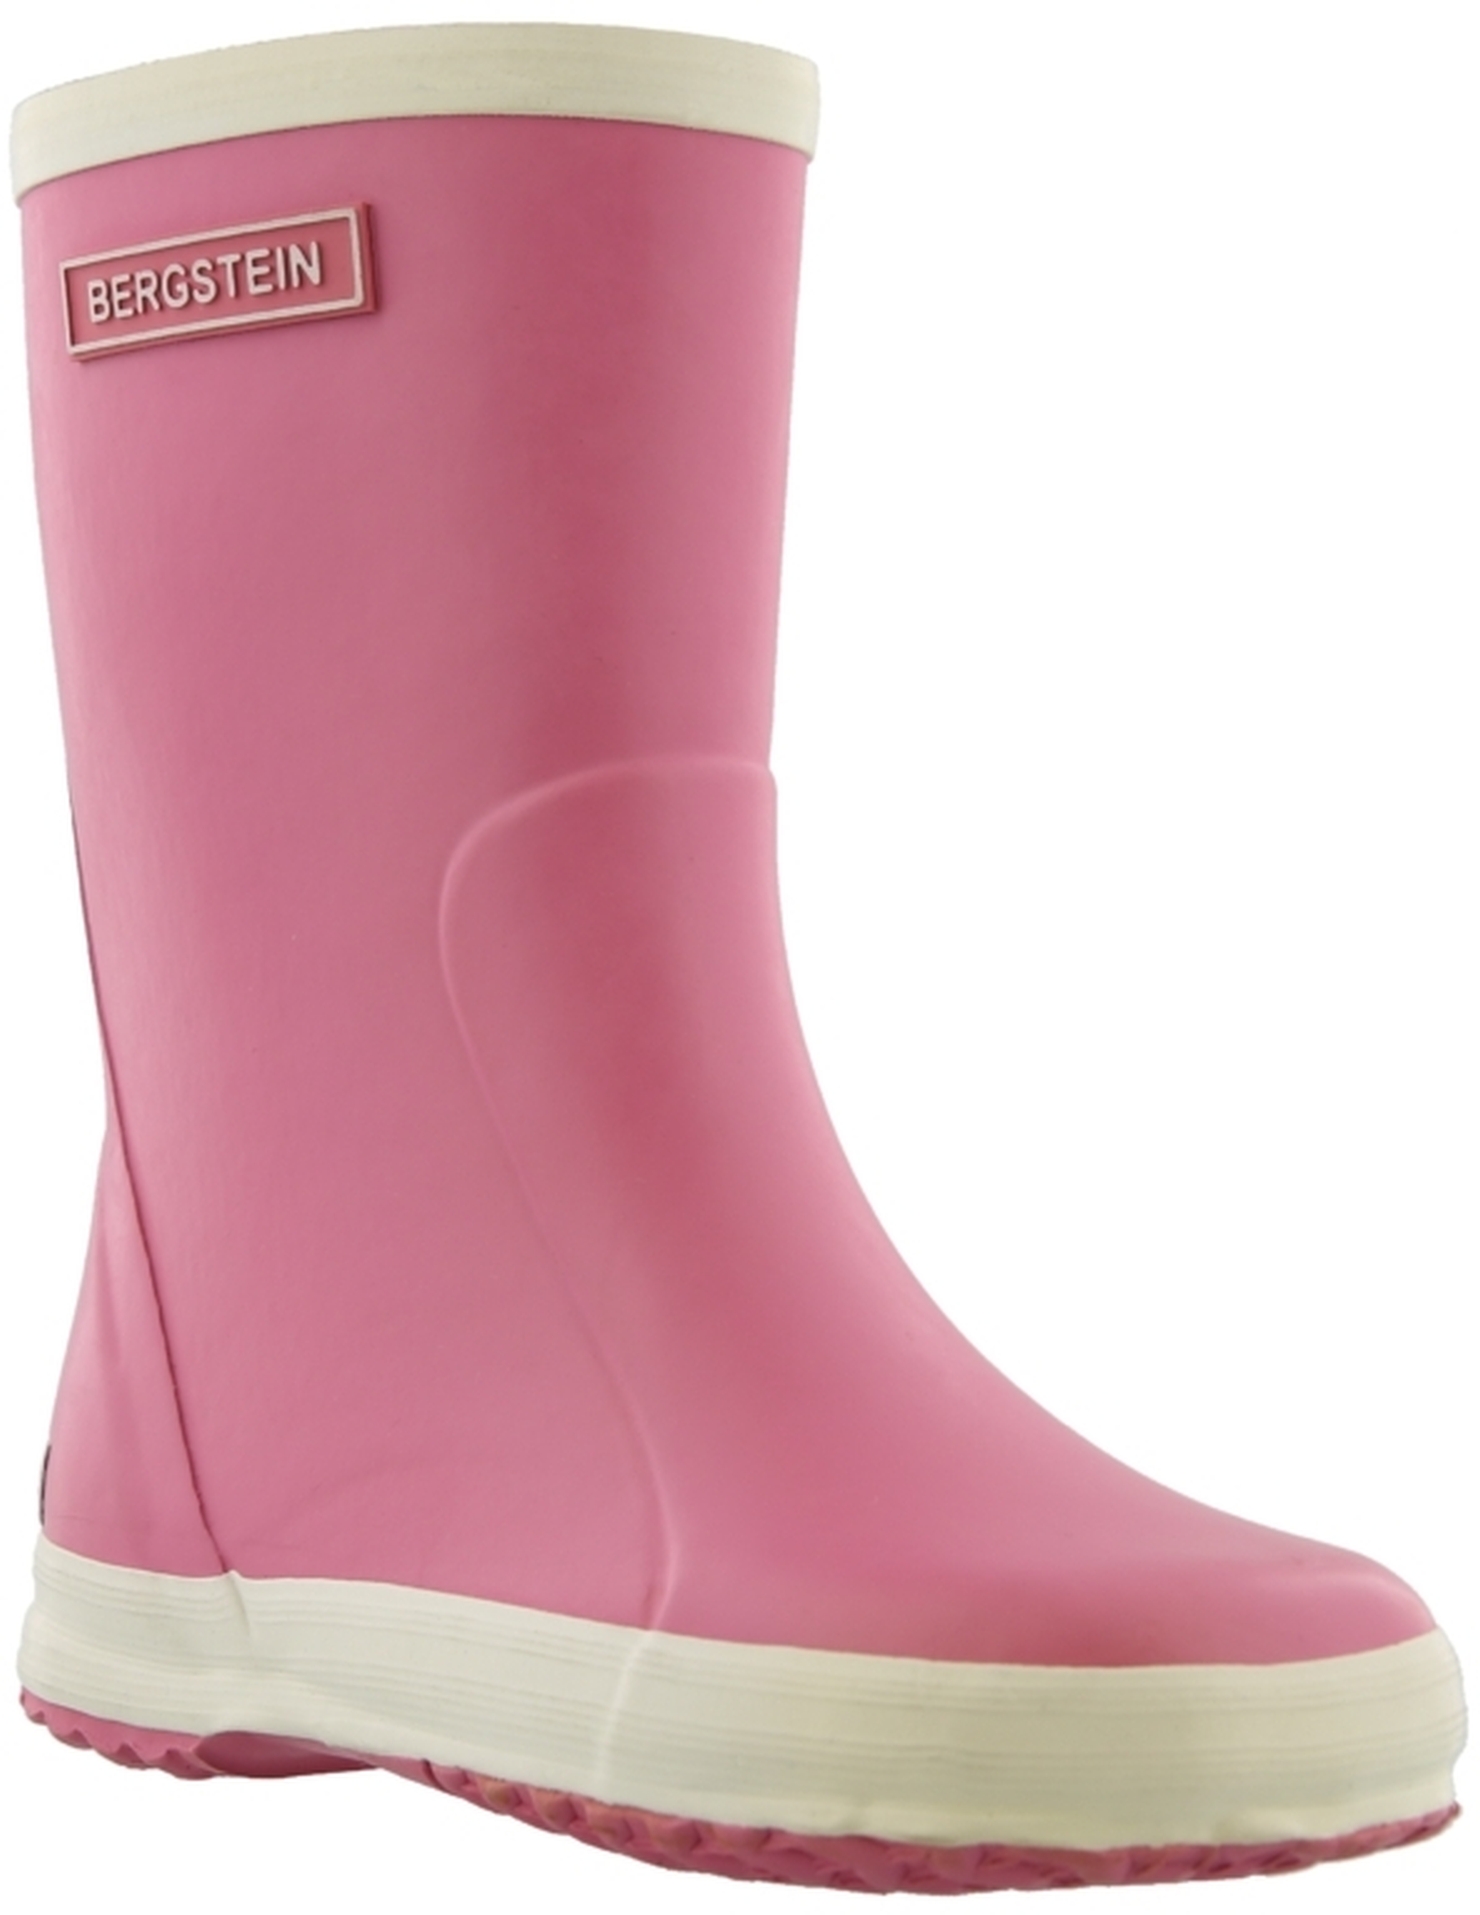 Bergstein Rainboot Pink Rubber